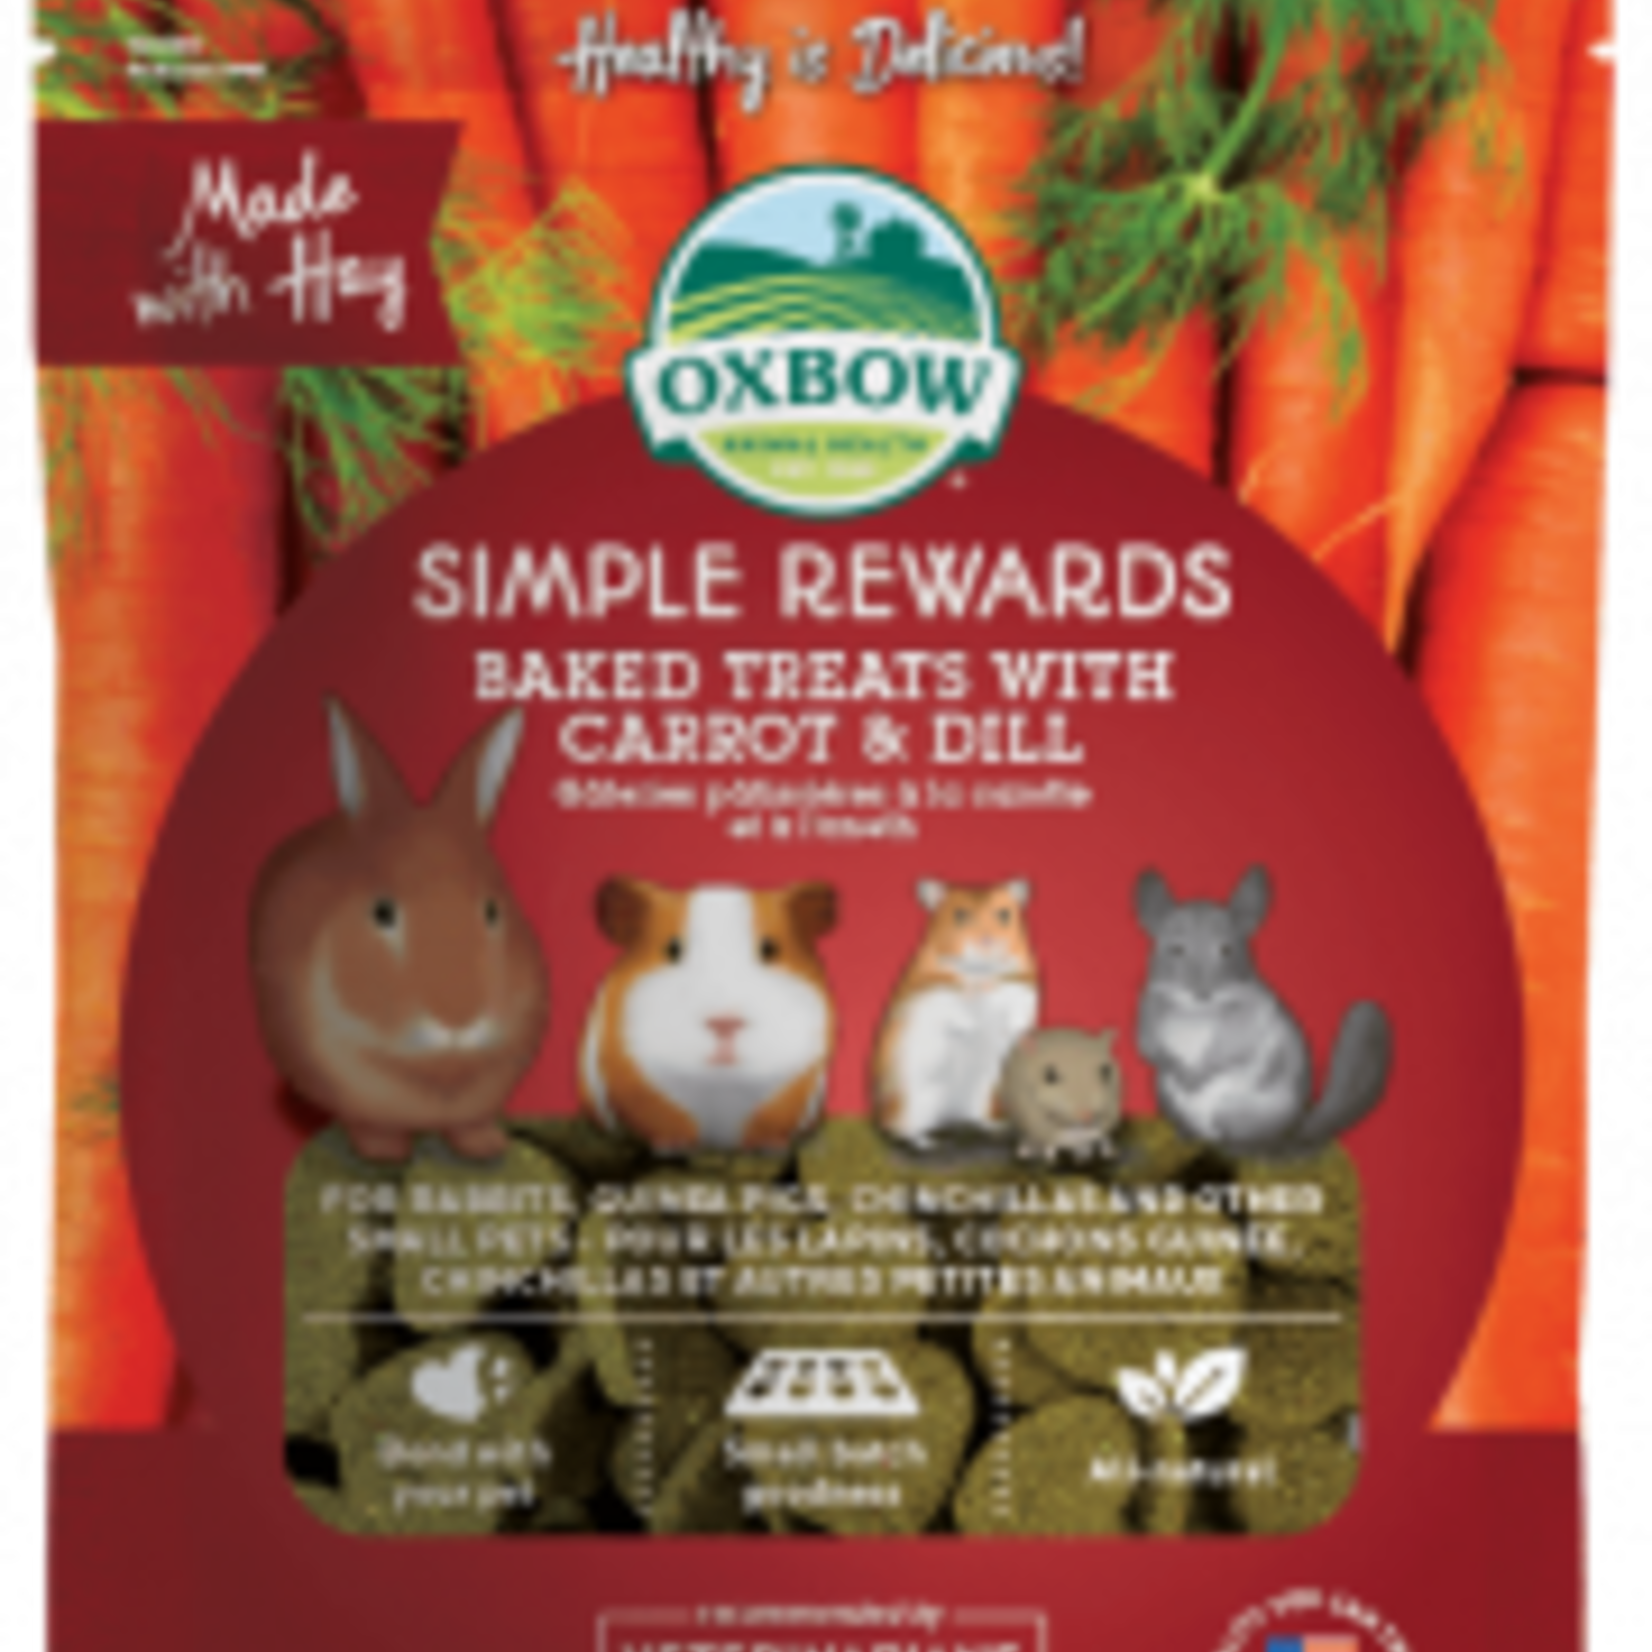 OXBOW ANIMAL HEALTH OXBOW Simple Rewards Carrot & Dill